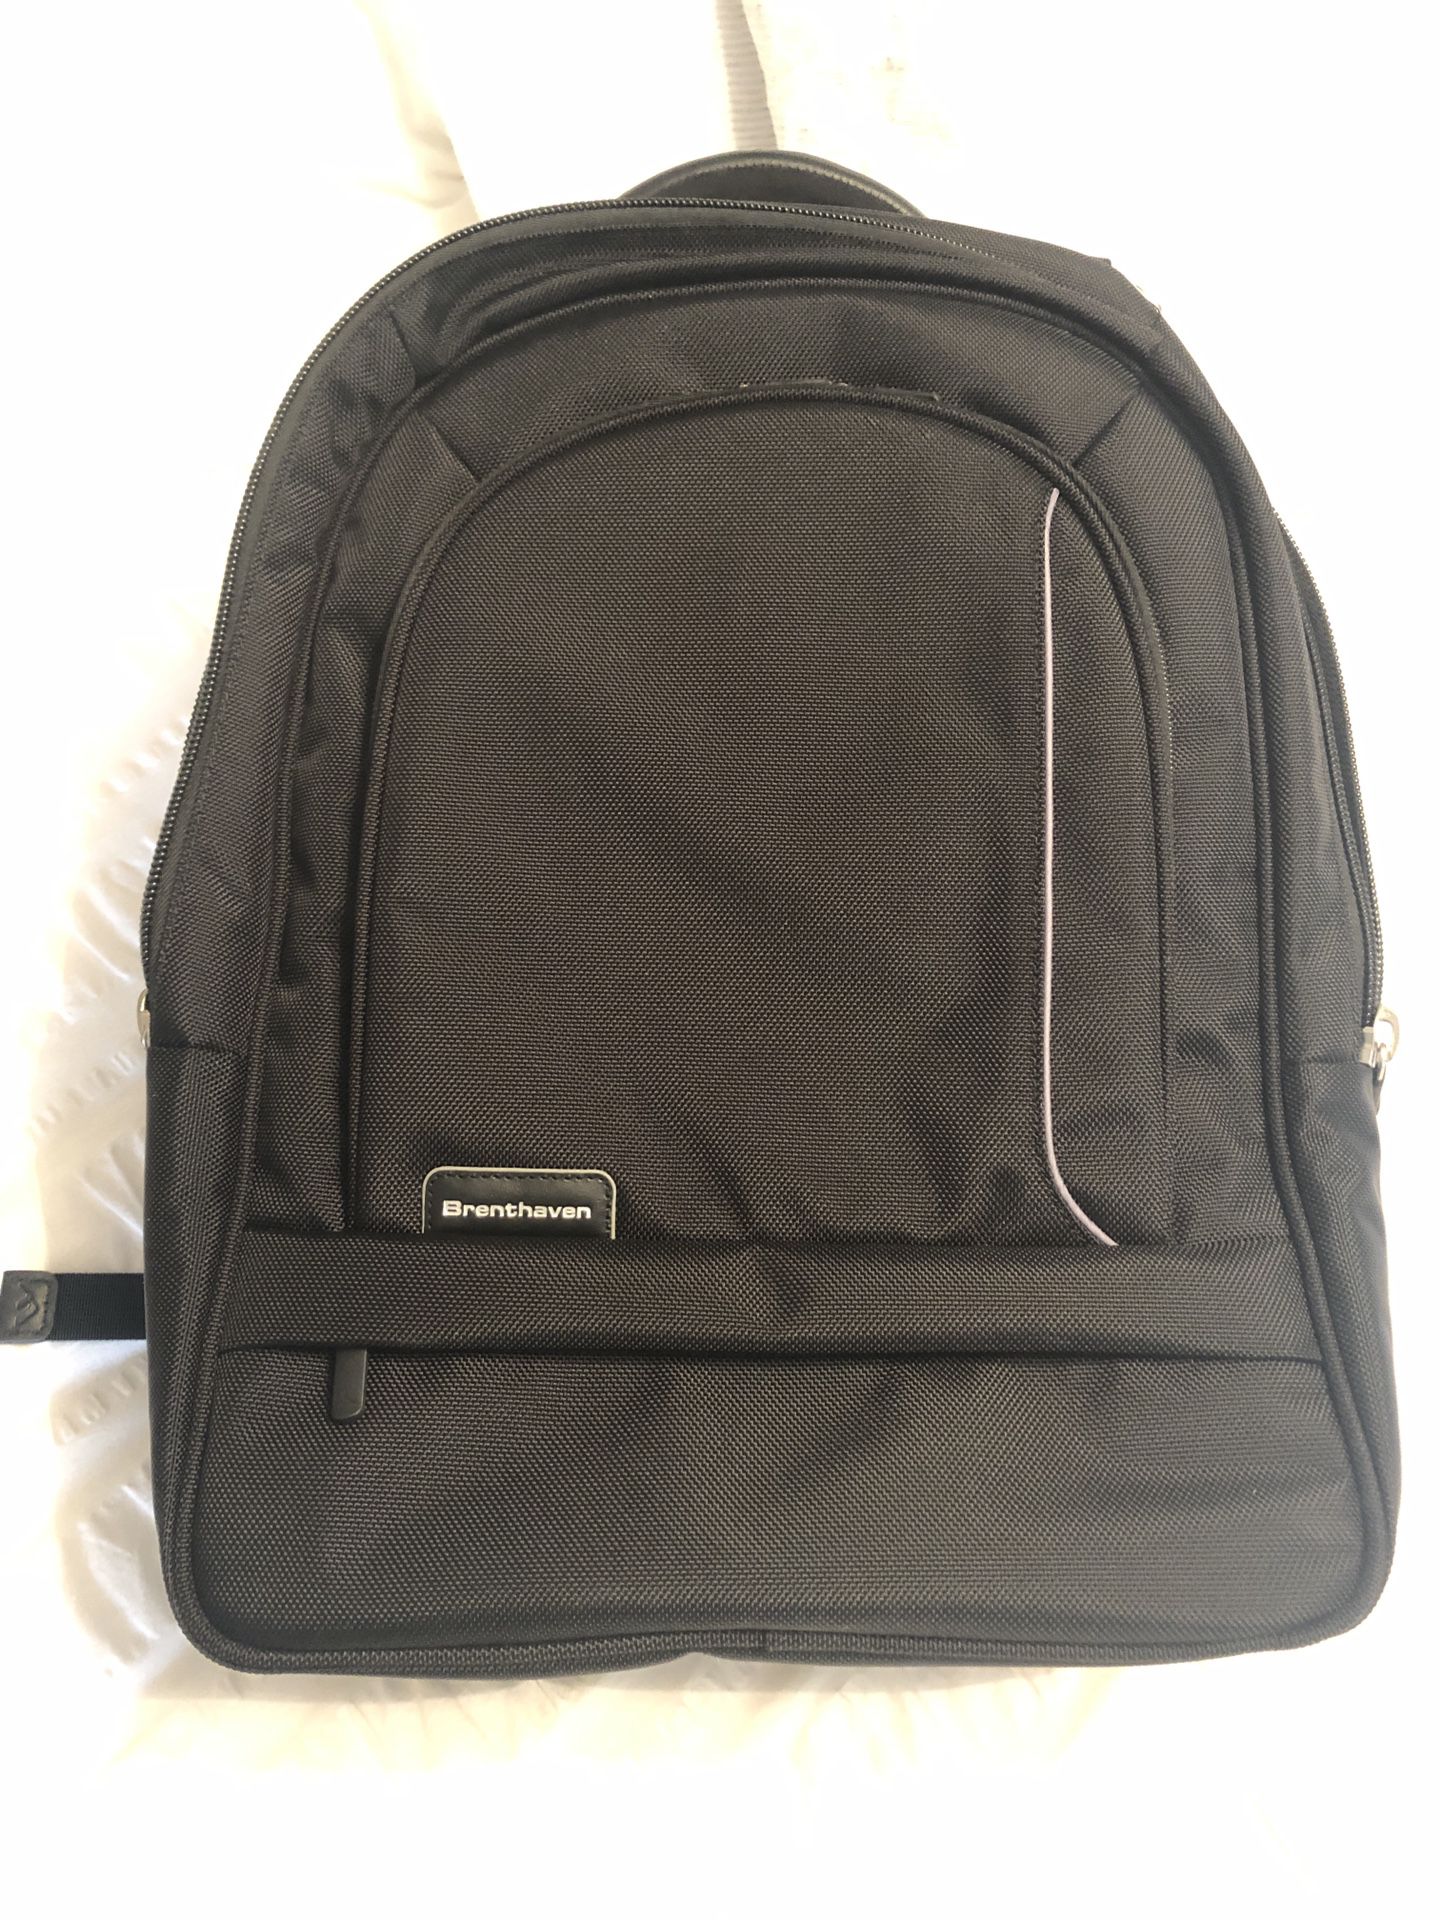 Brenthaven Laptop Backpack - brand new!